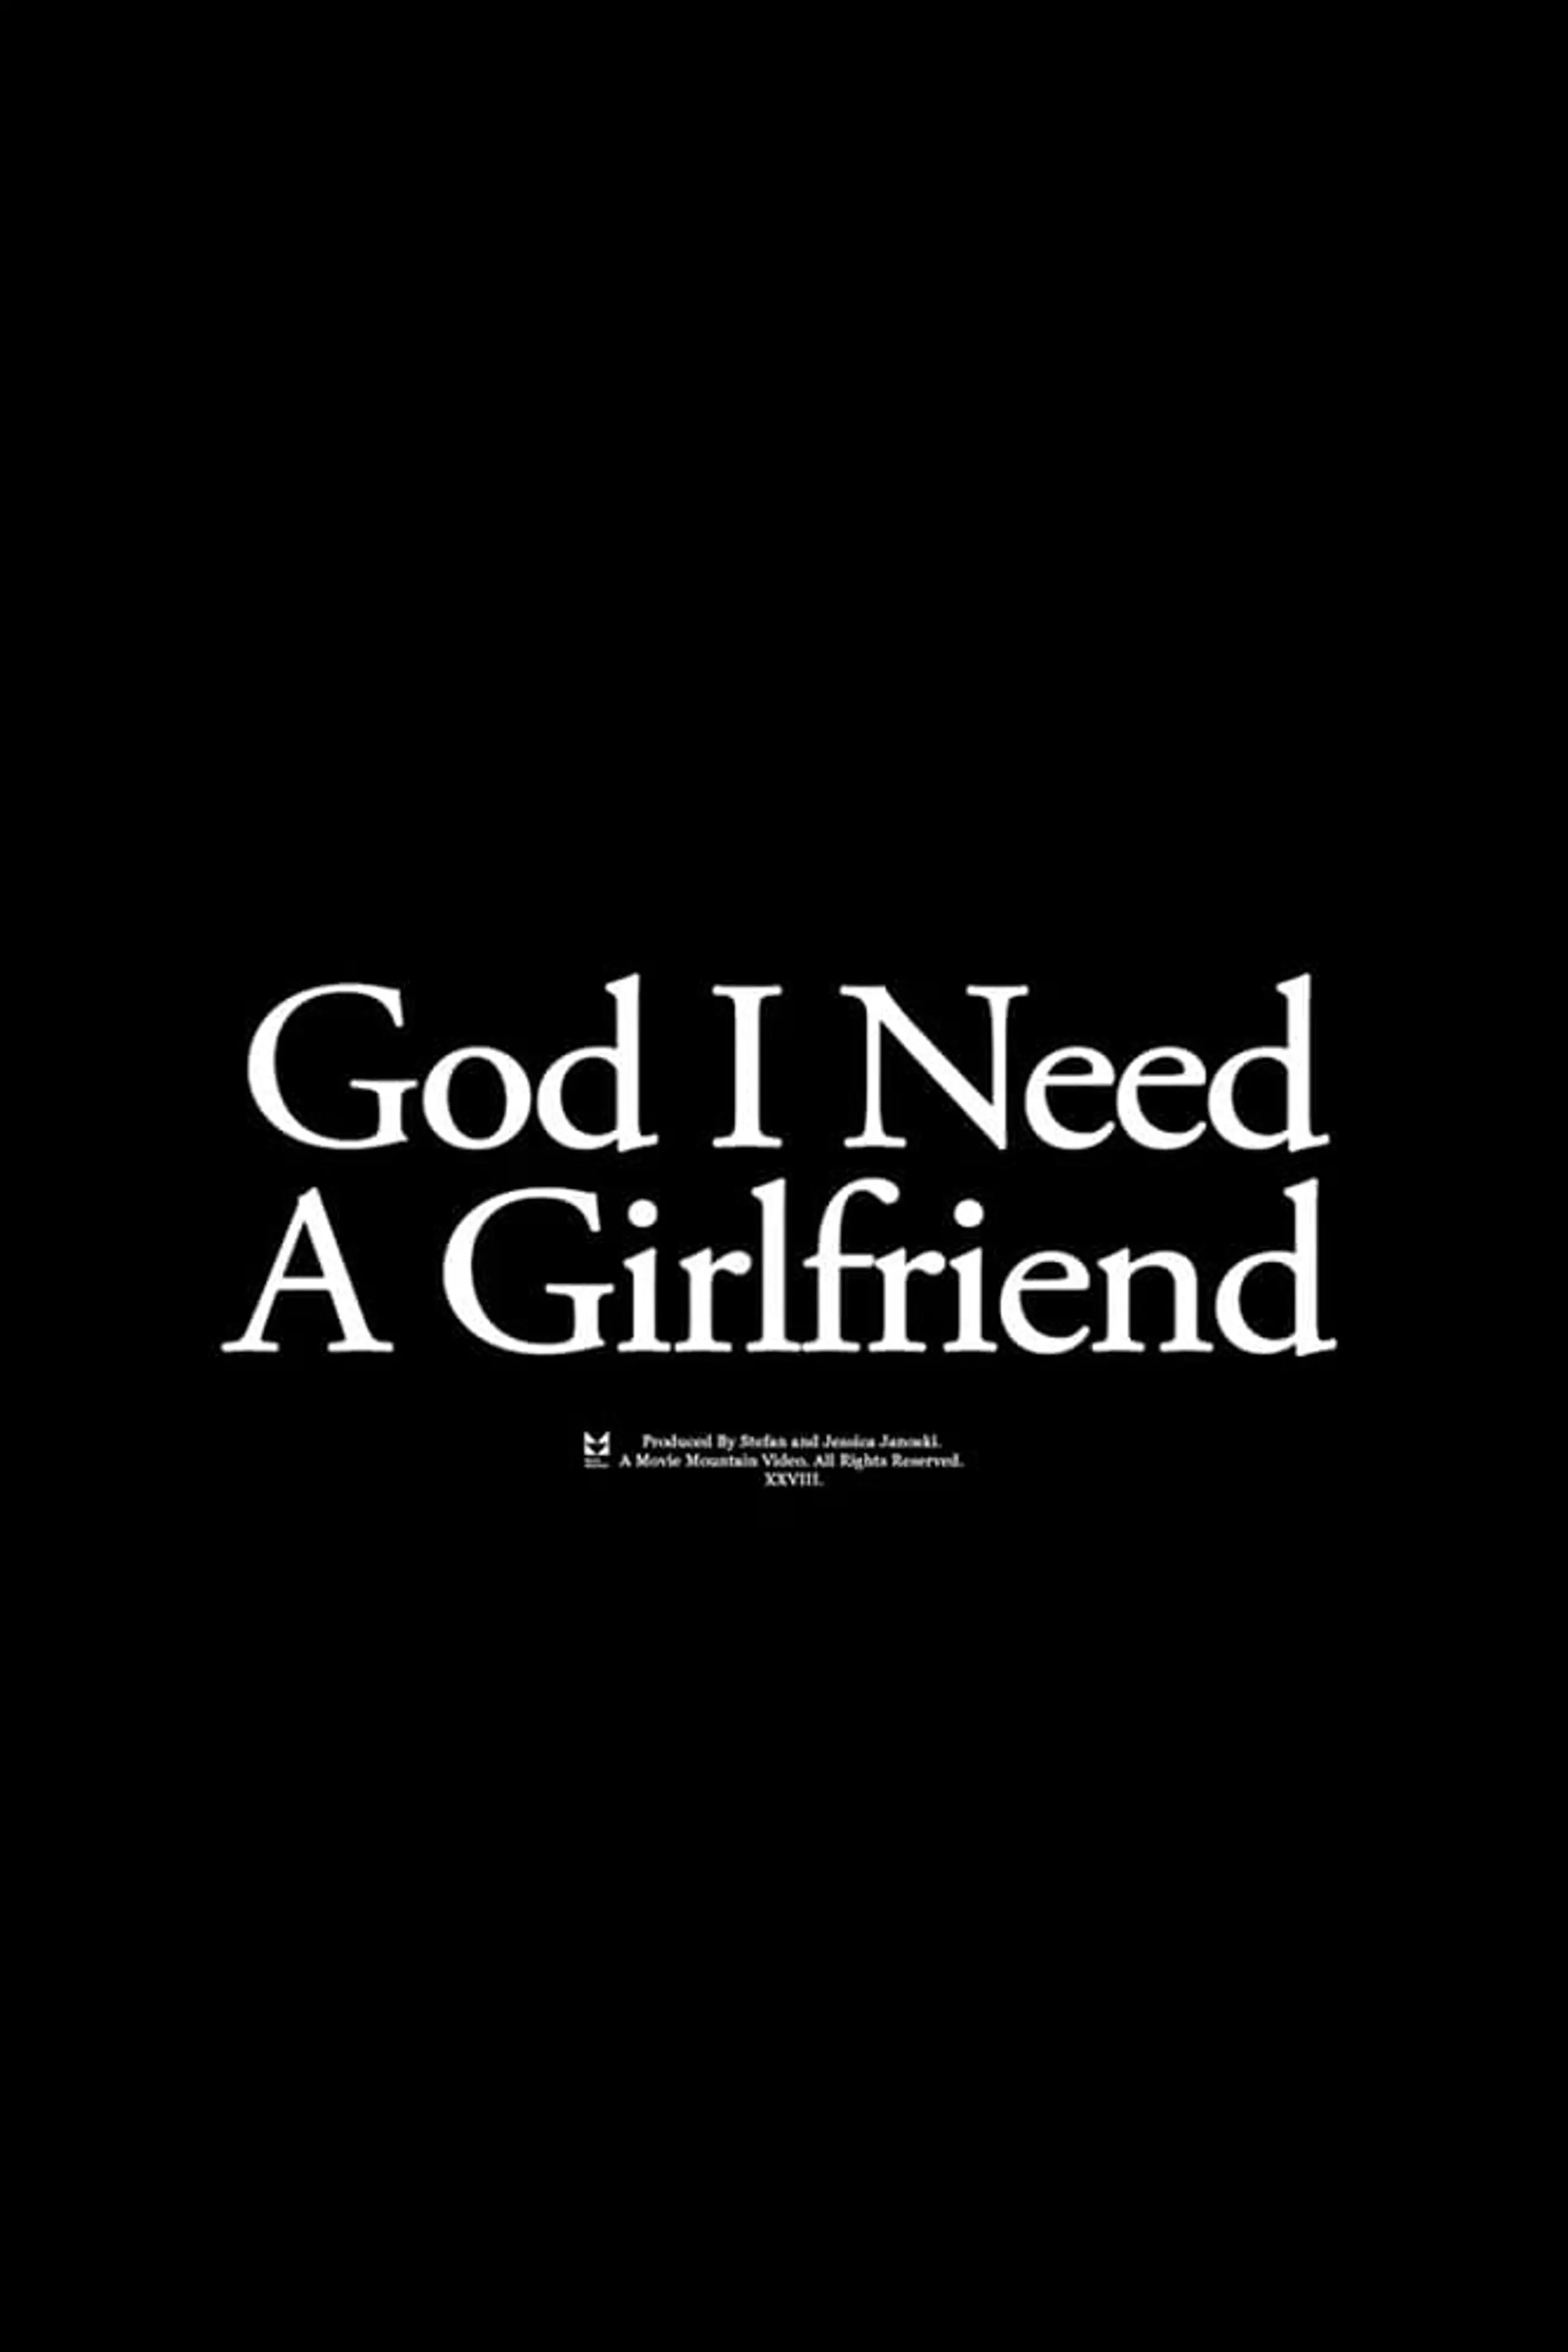 God I Need a Girlfriend